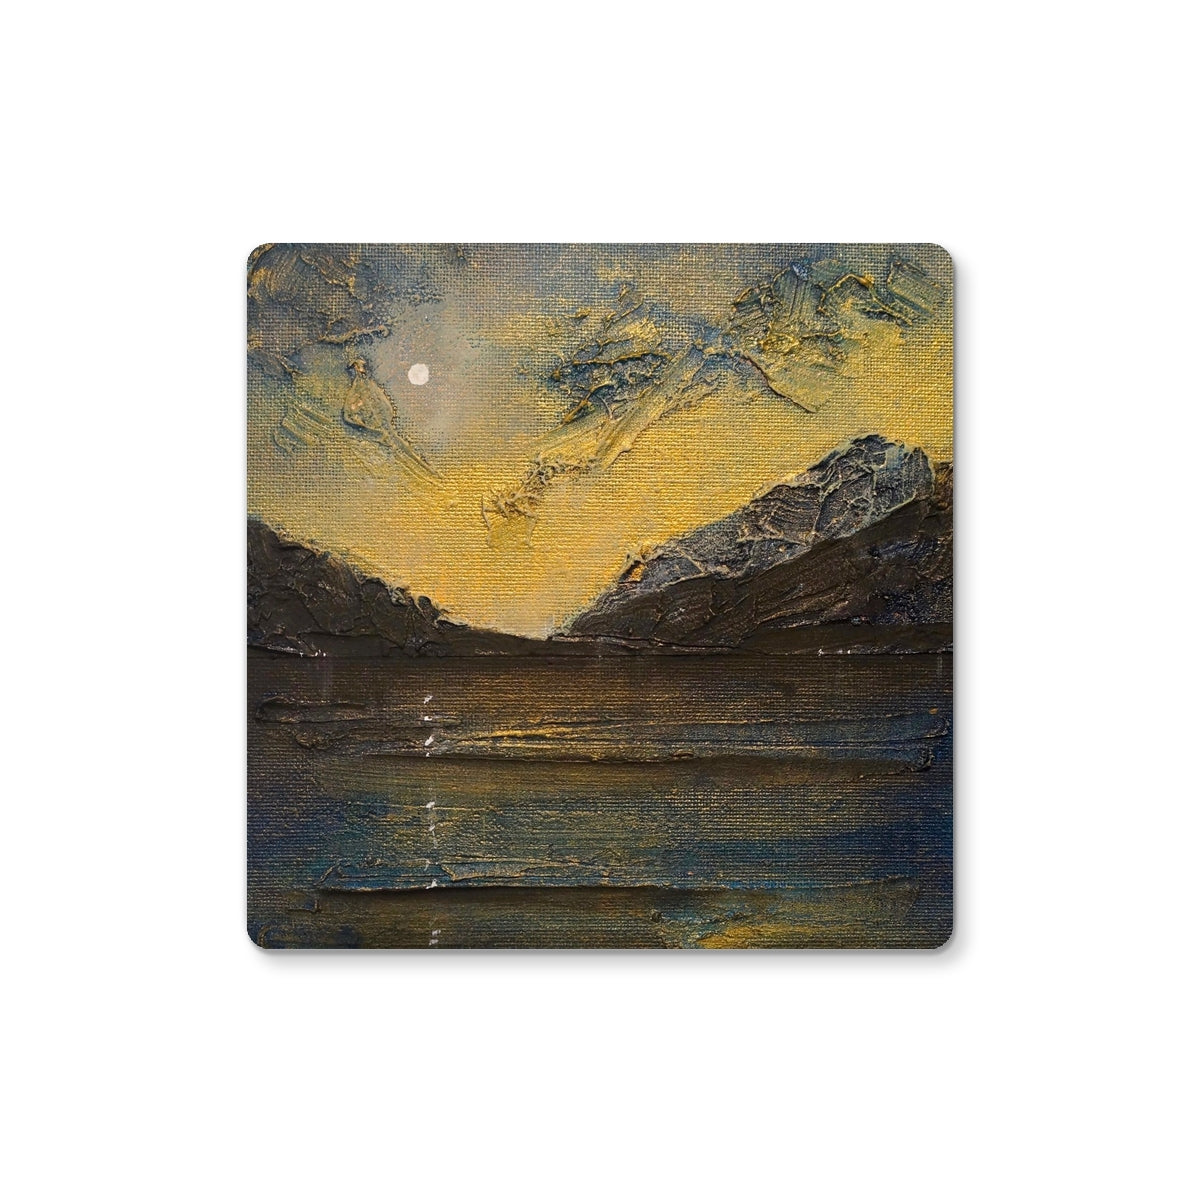 Loch Lomond Moonlight Art Gifts Coaster-Coasters-Scottish Lochs & Mountains Art Gallery-Single Coaster-Paintings, Prints, Homeware, Art Gifts From Scotland By Scottish Artist Kevin Hunter